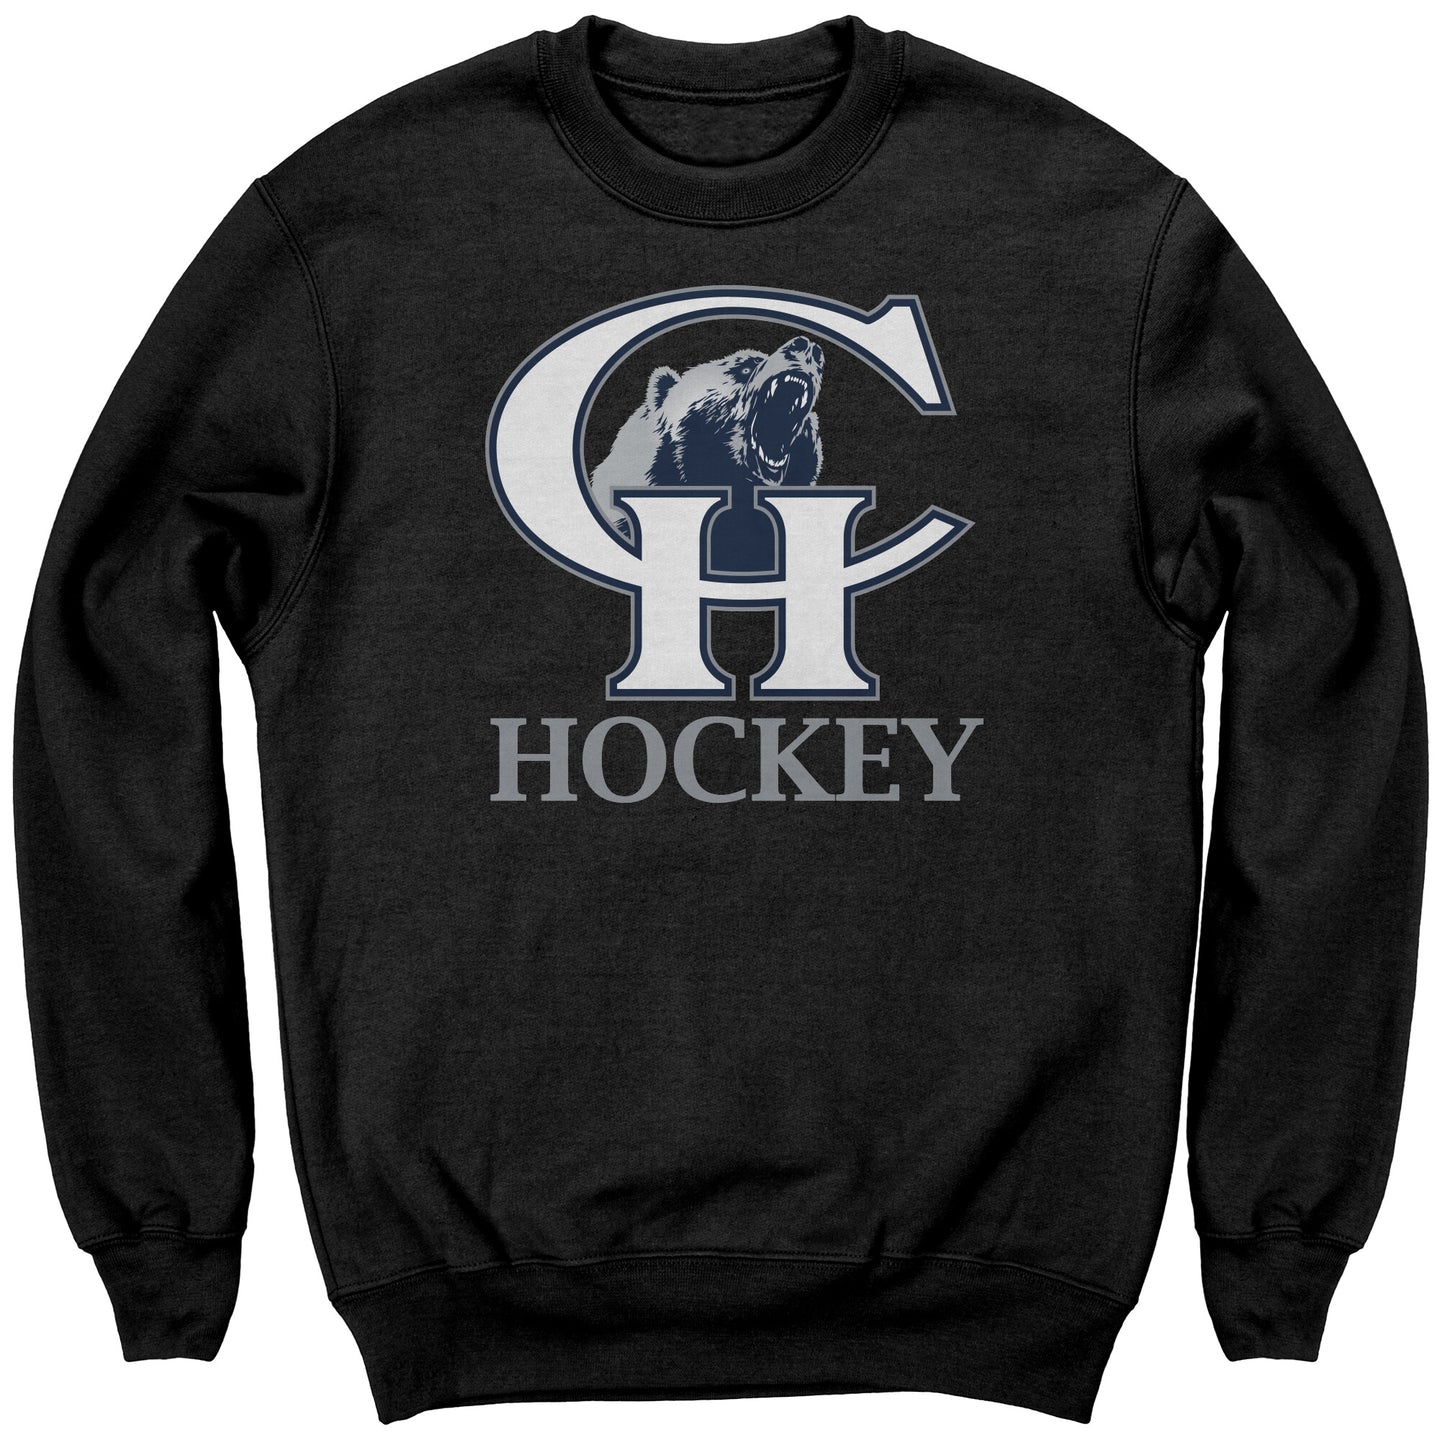 Youth Copper Hills Hockey CH Grizzly Sweatshirt